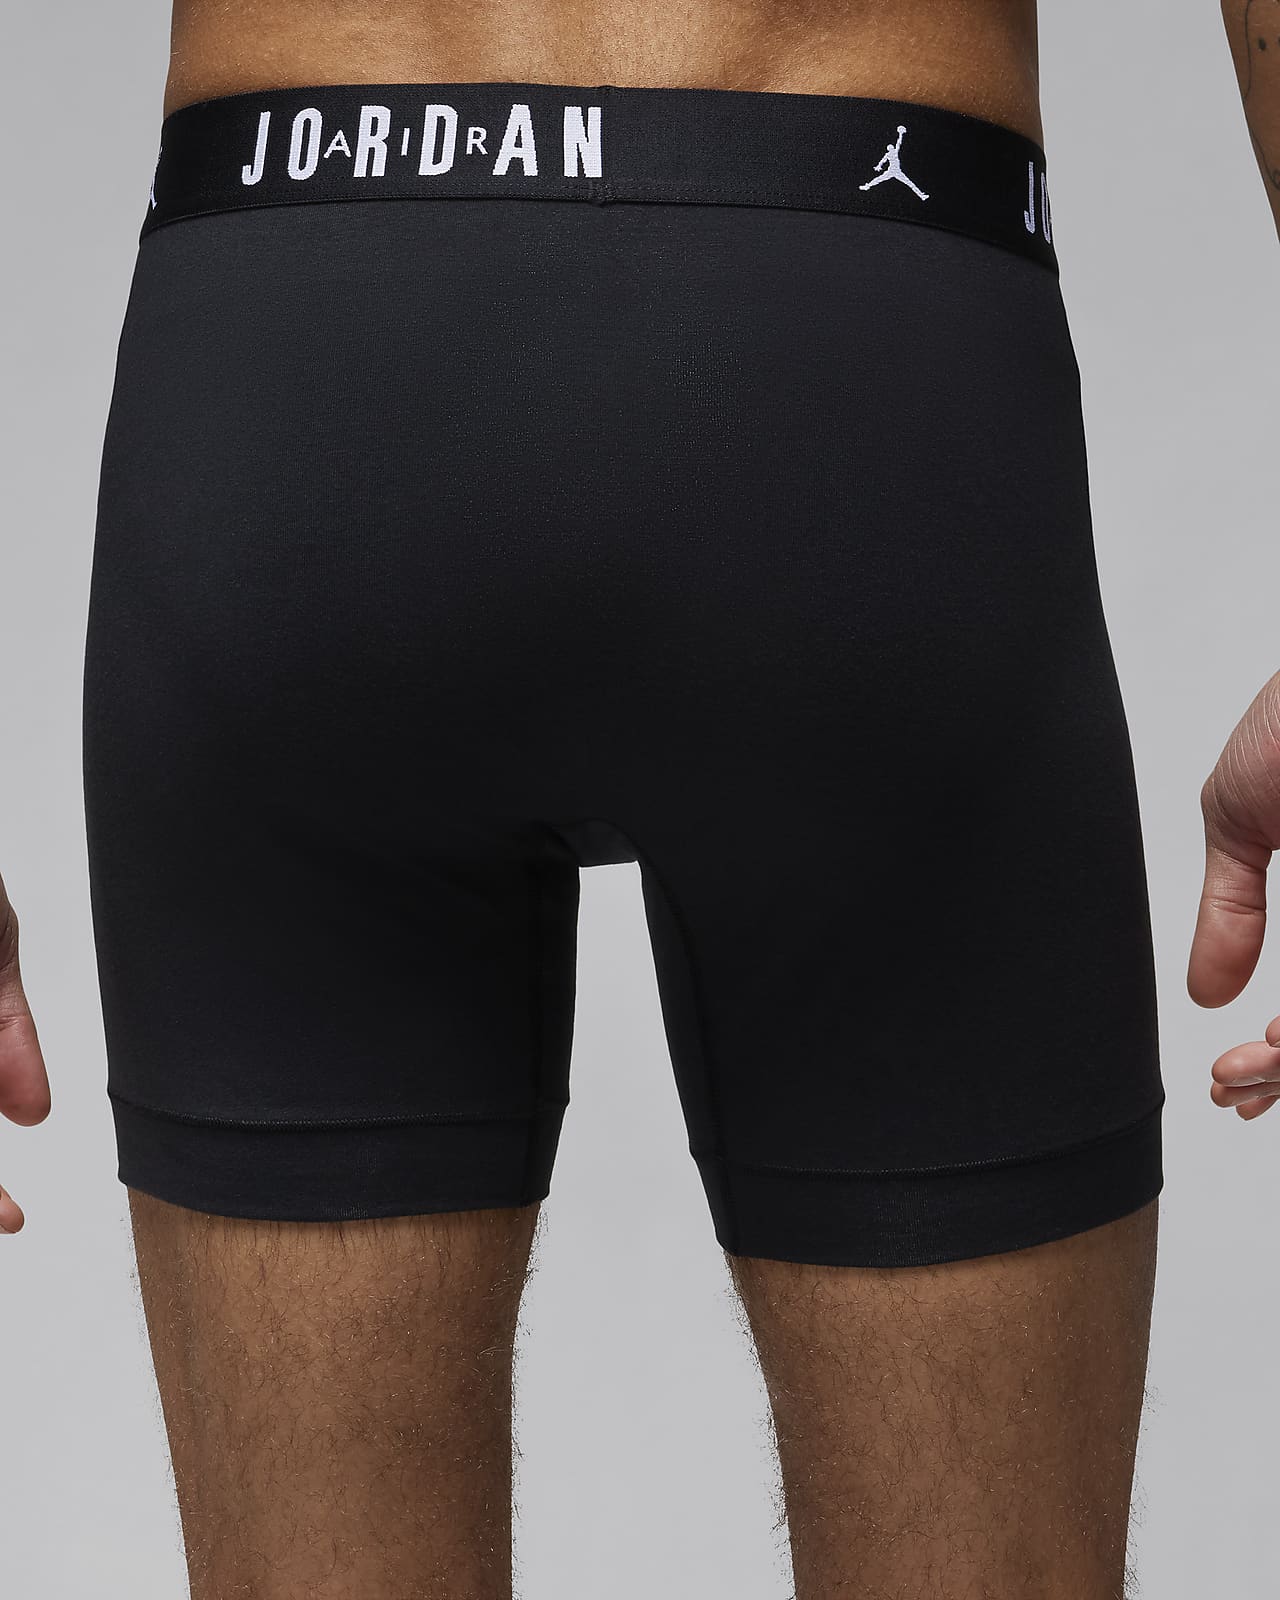 Nike Mens Boxer Shorts Boxers Pants Briefs Trunks Underwear Cotton 3 P -  Weekend Sports uk